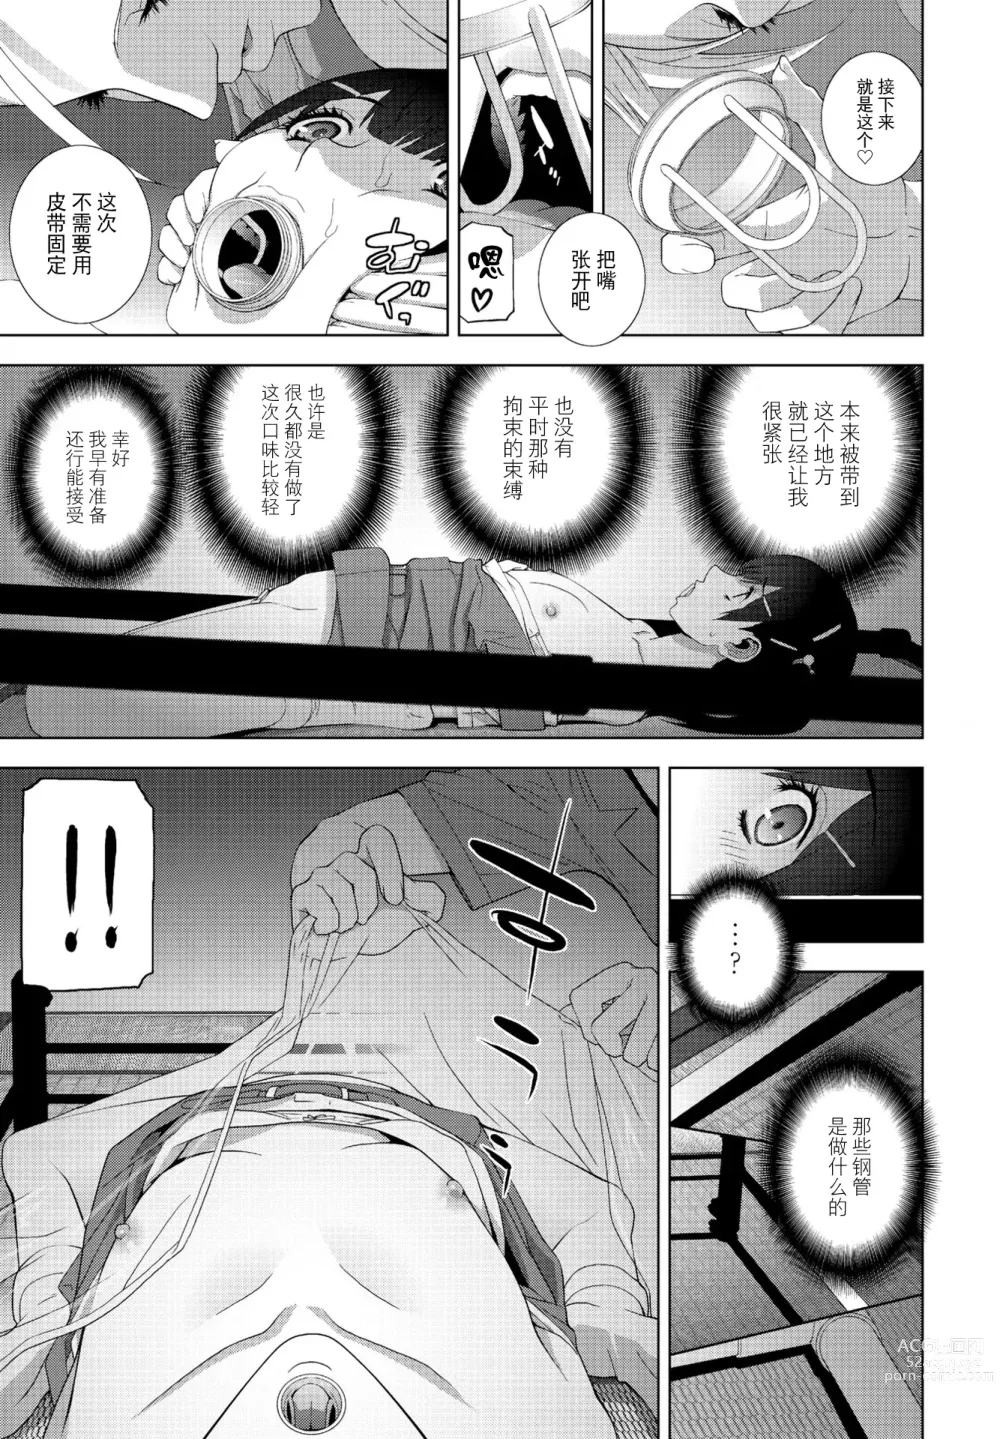 Page 5 of manga Imouto ni Chikau Hi